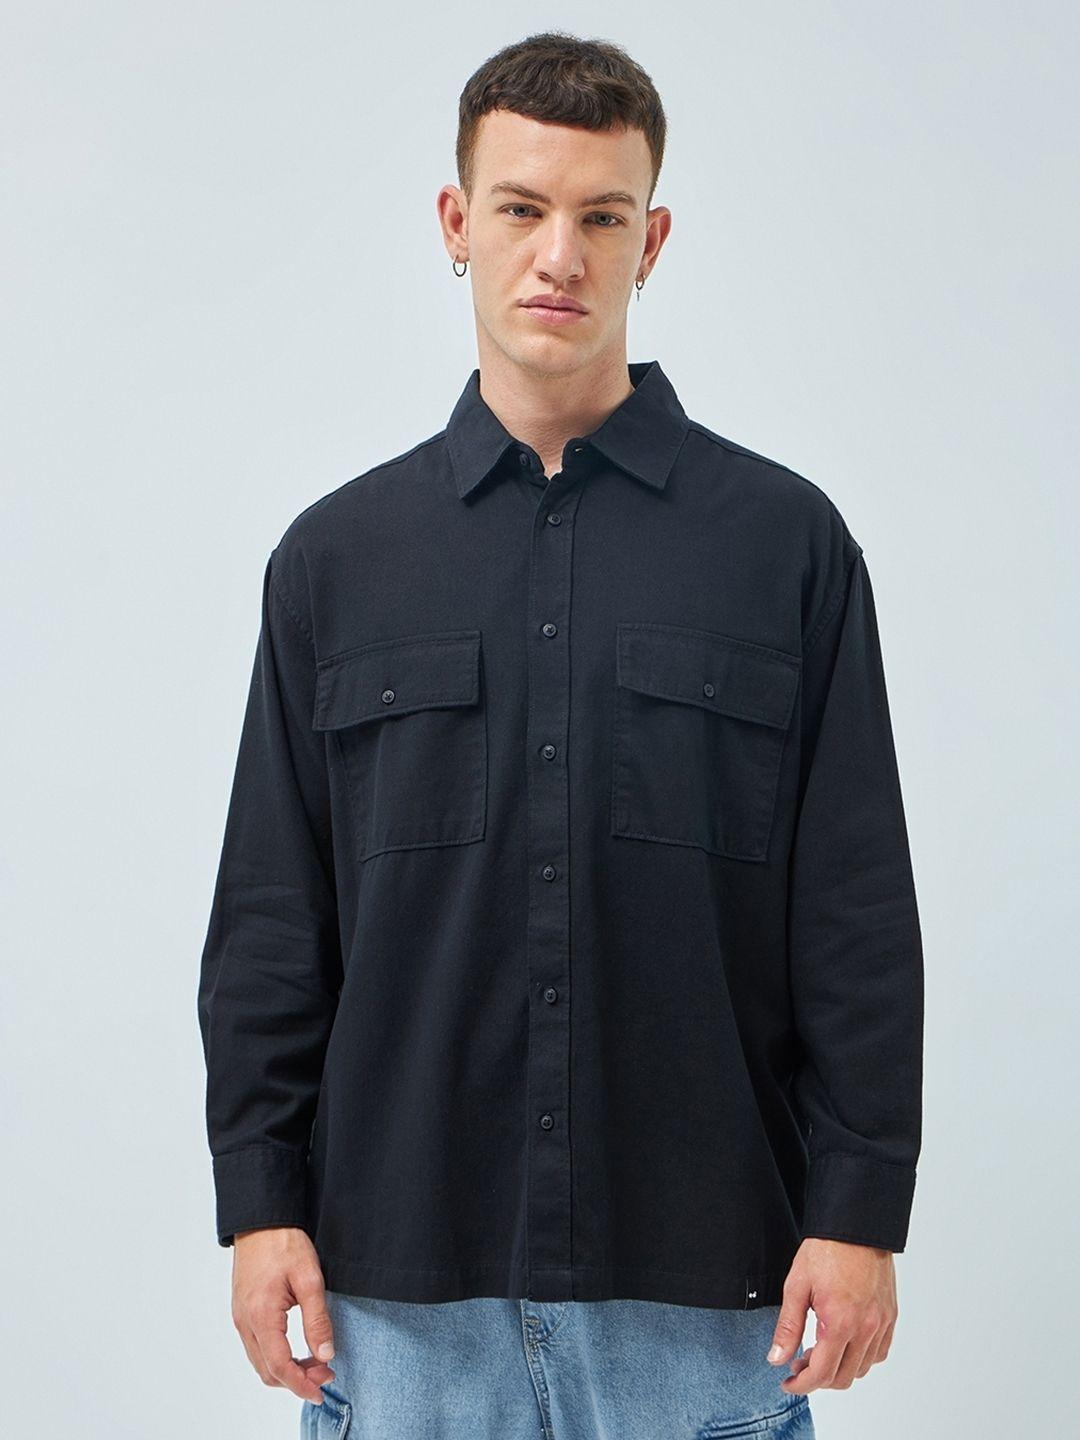 bewakoof black oversized long sleeves cotton casual shirt